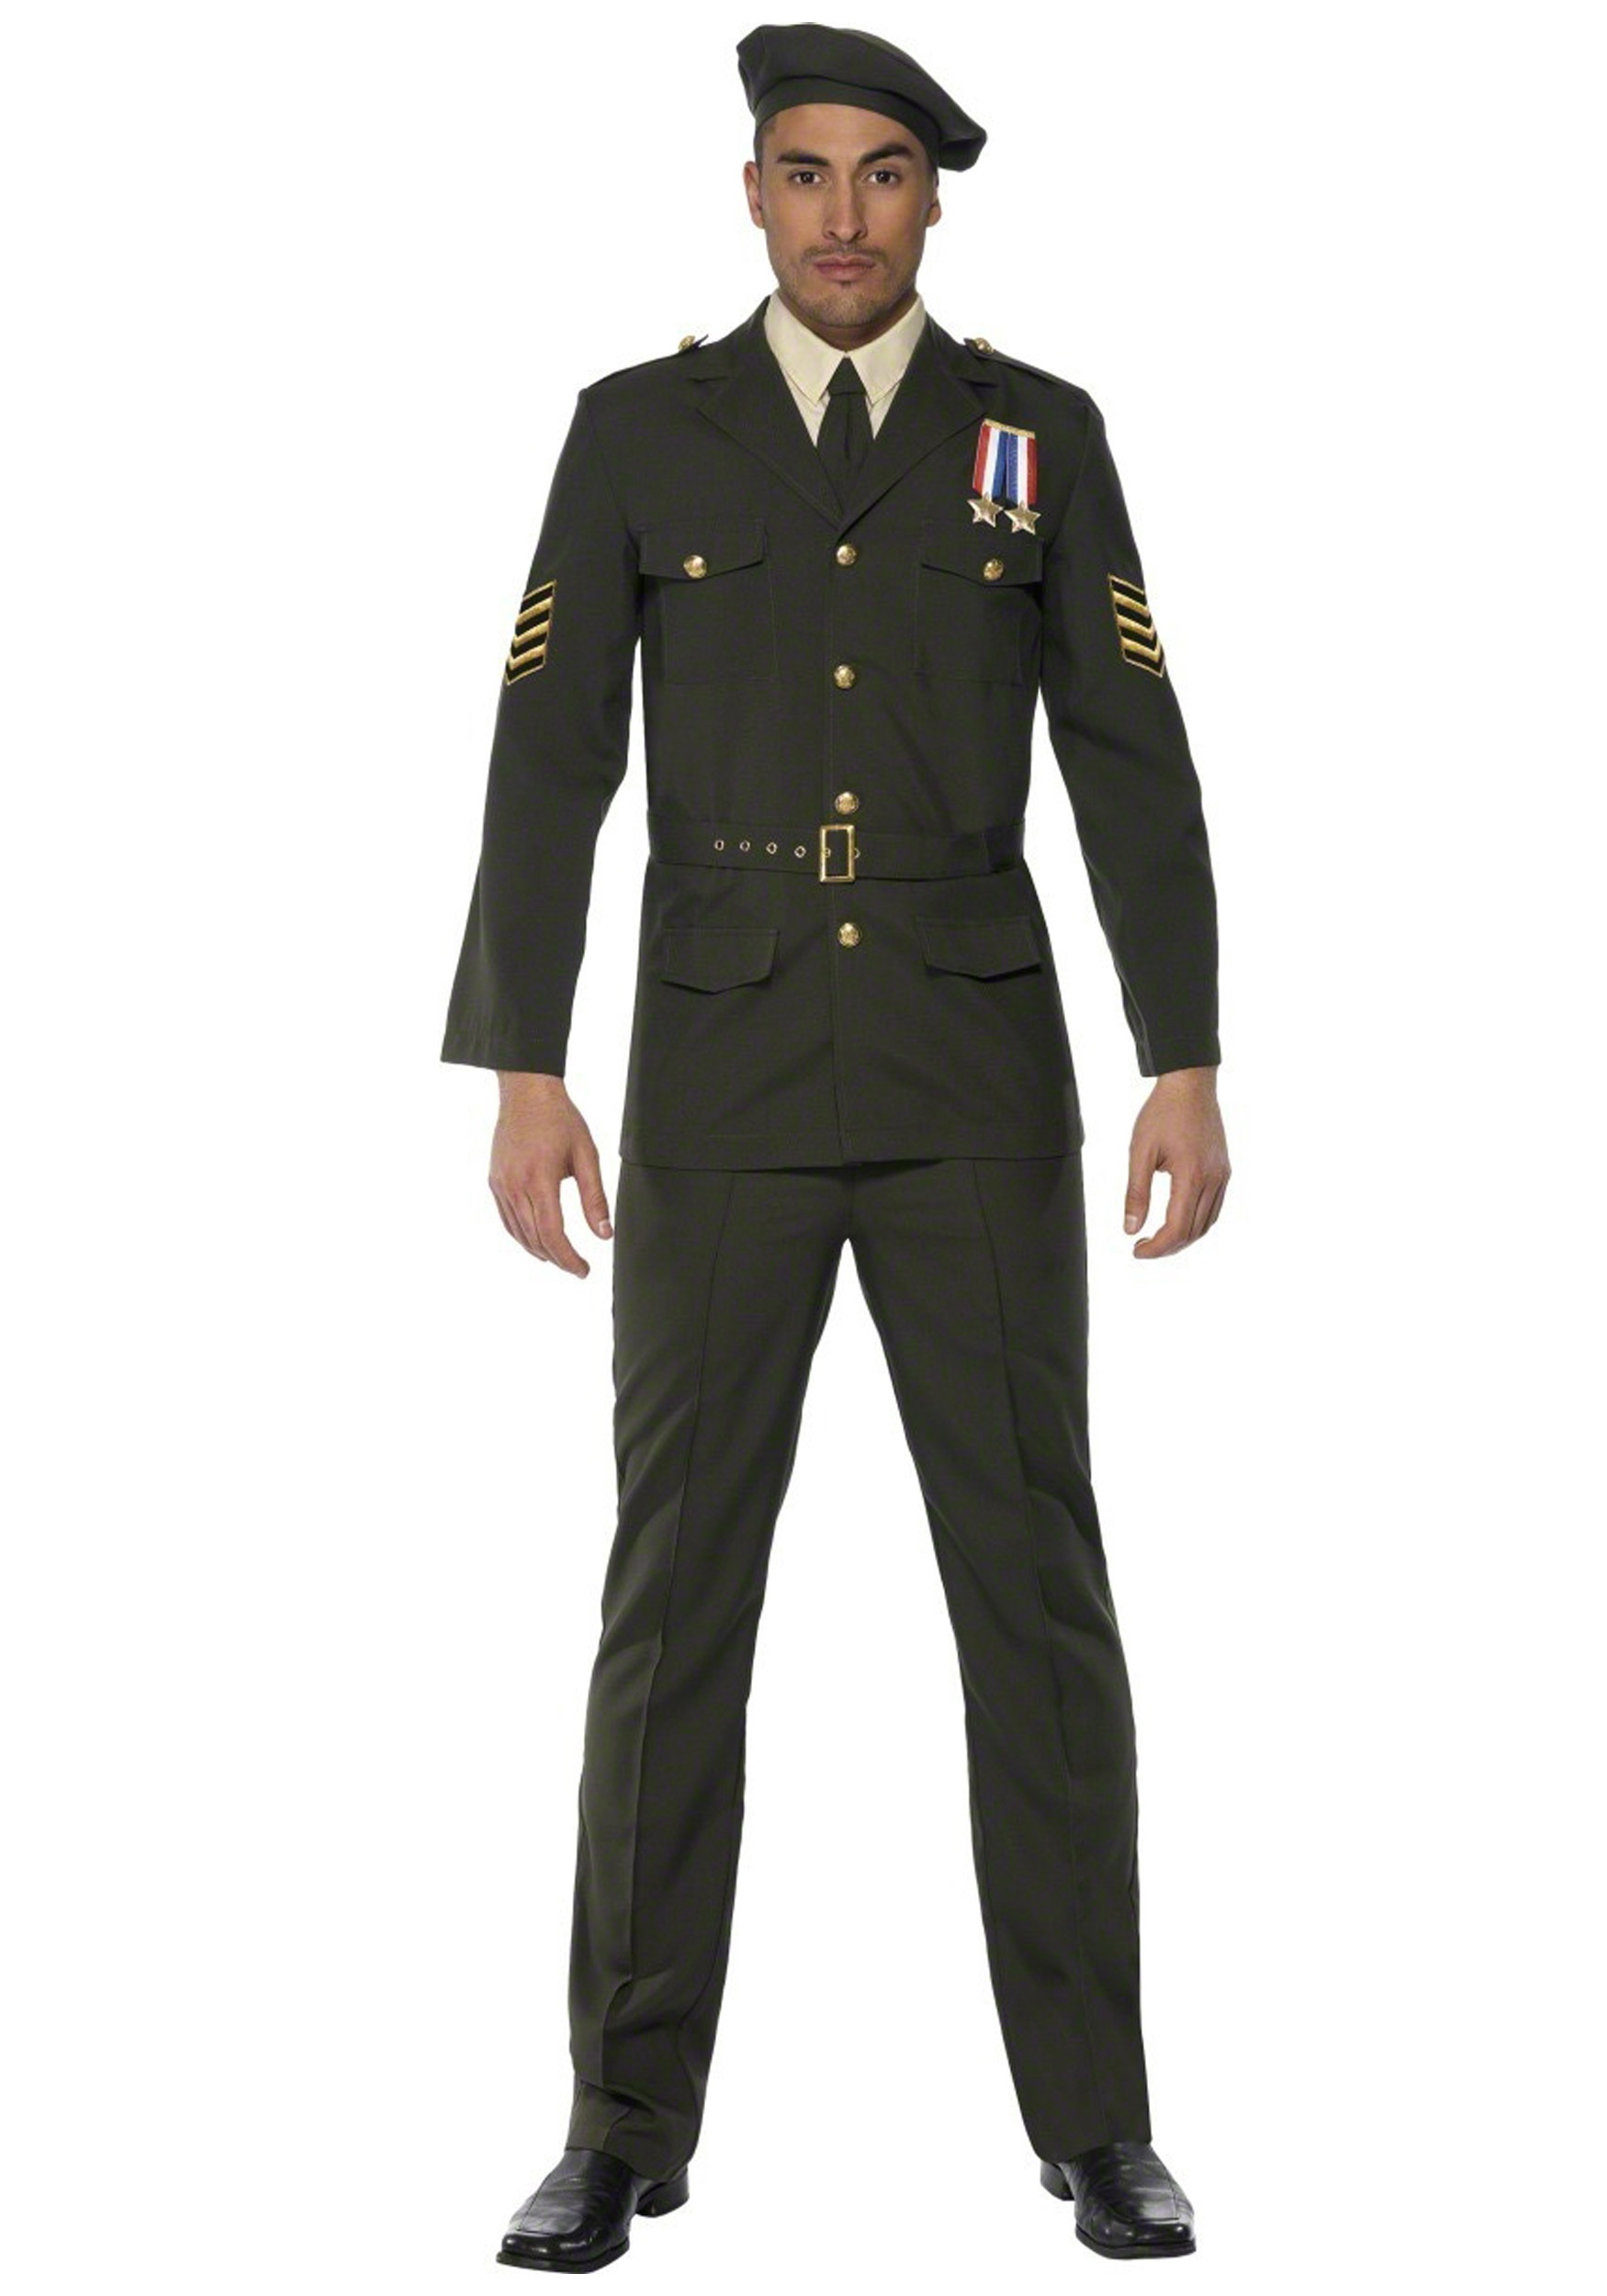 Wartime Officer Uniform